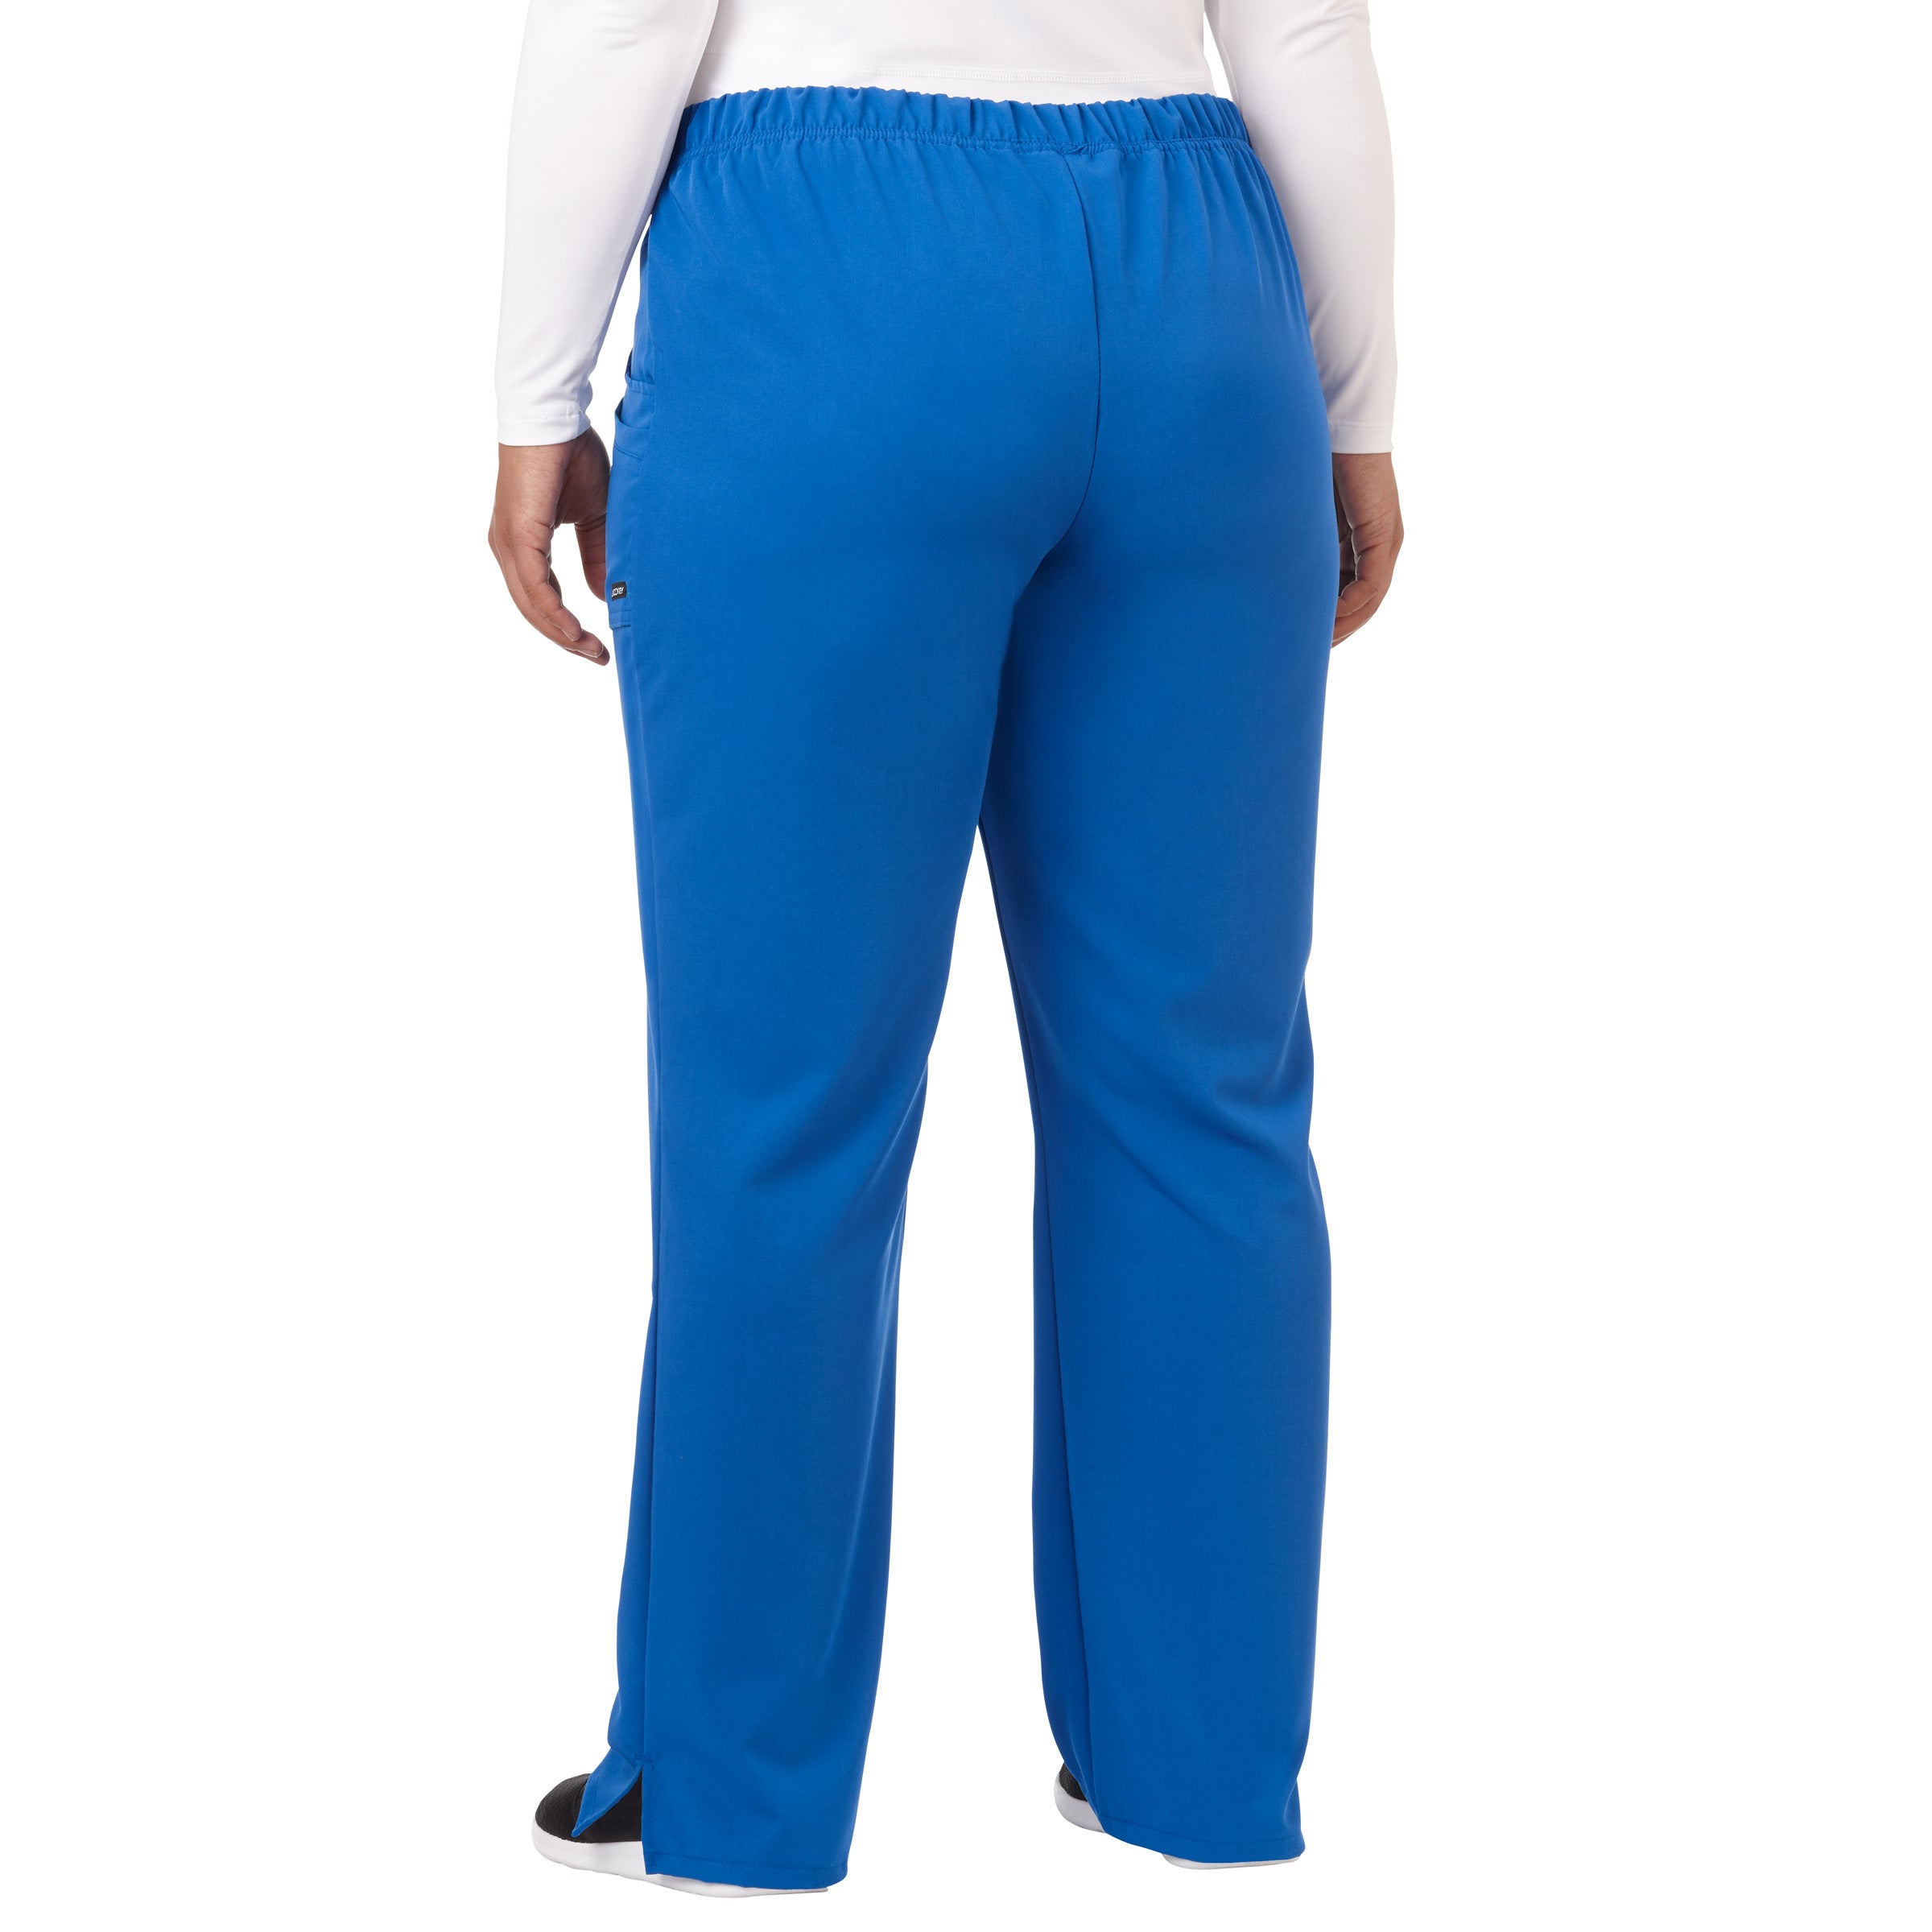 Jockey Comfort Pants | Women's Scrub Pants | Medical Scrubs Online ...